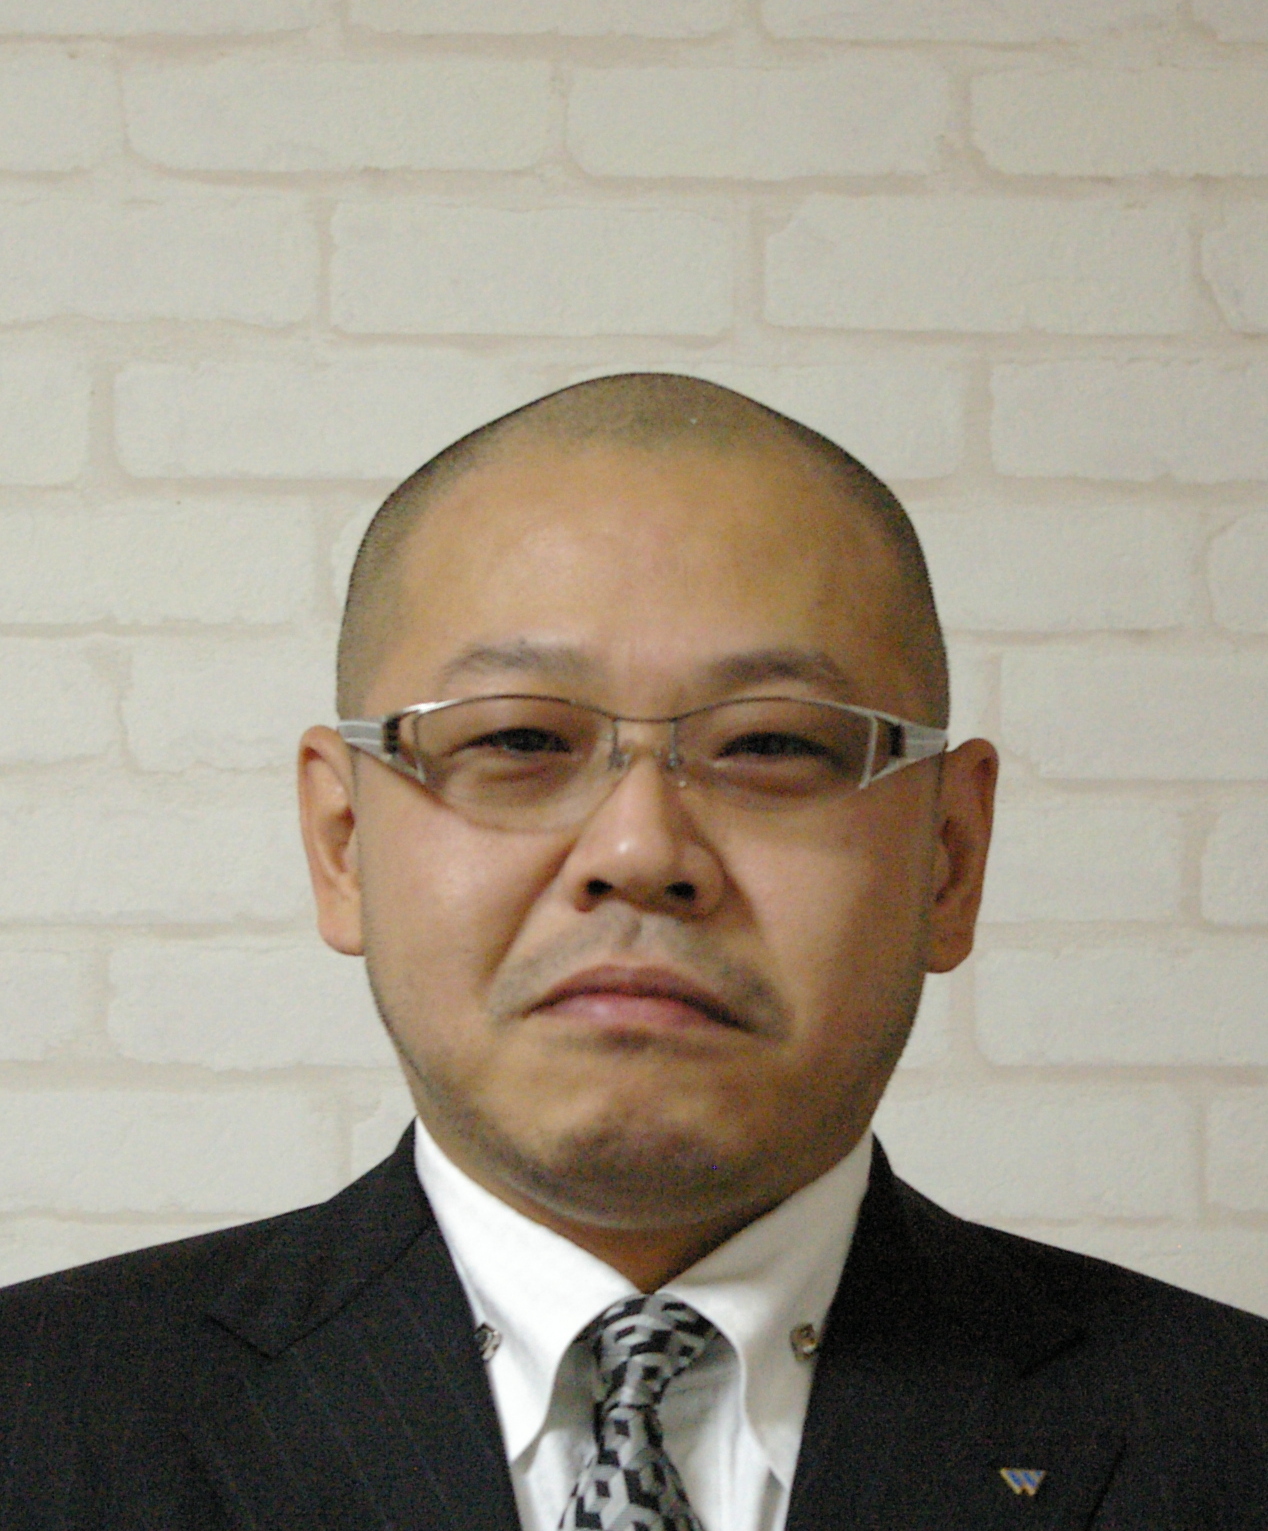 ワールド 「品質と価格で信頼強化」 阿部慎也代表取締役社長